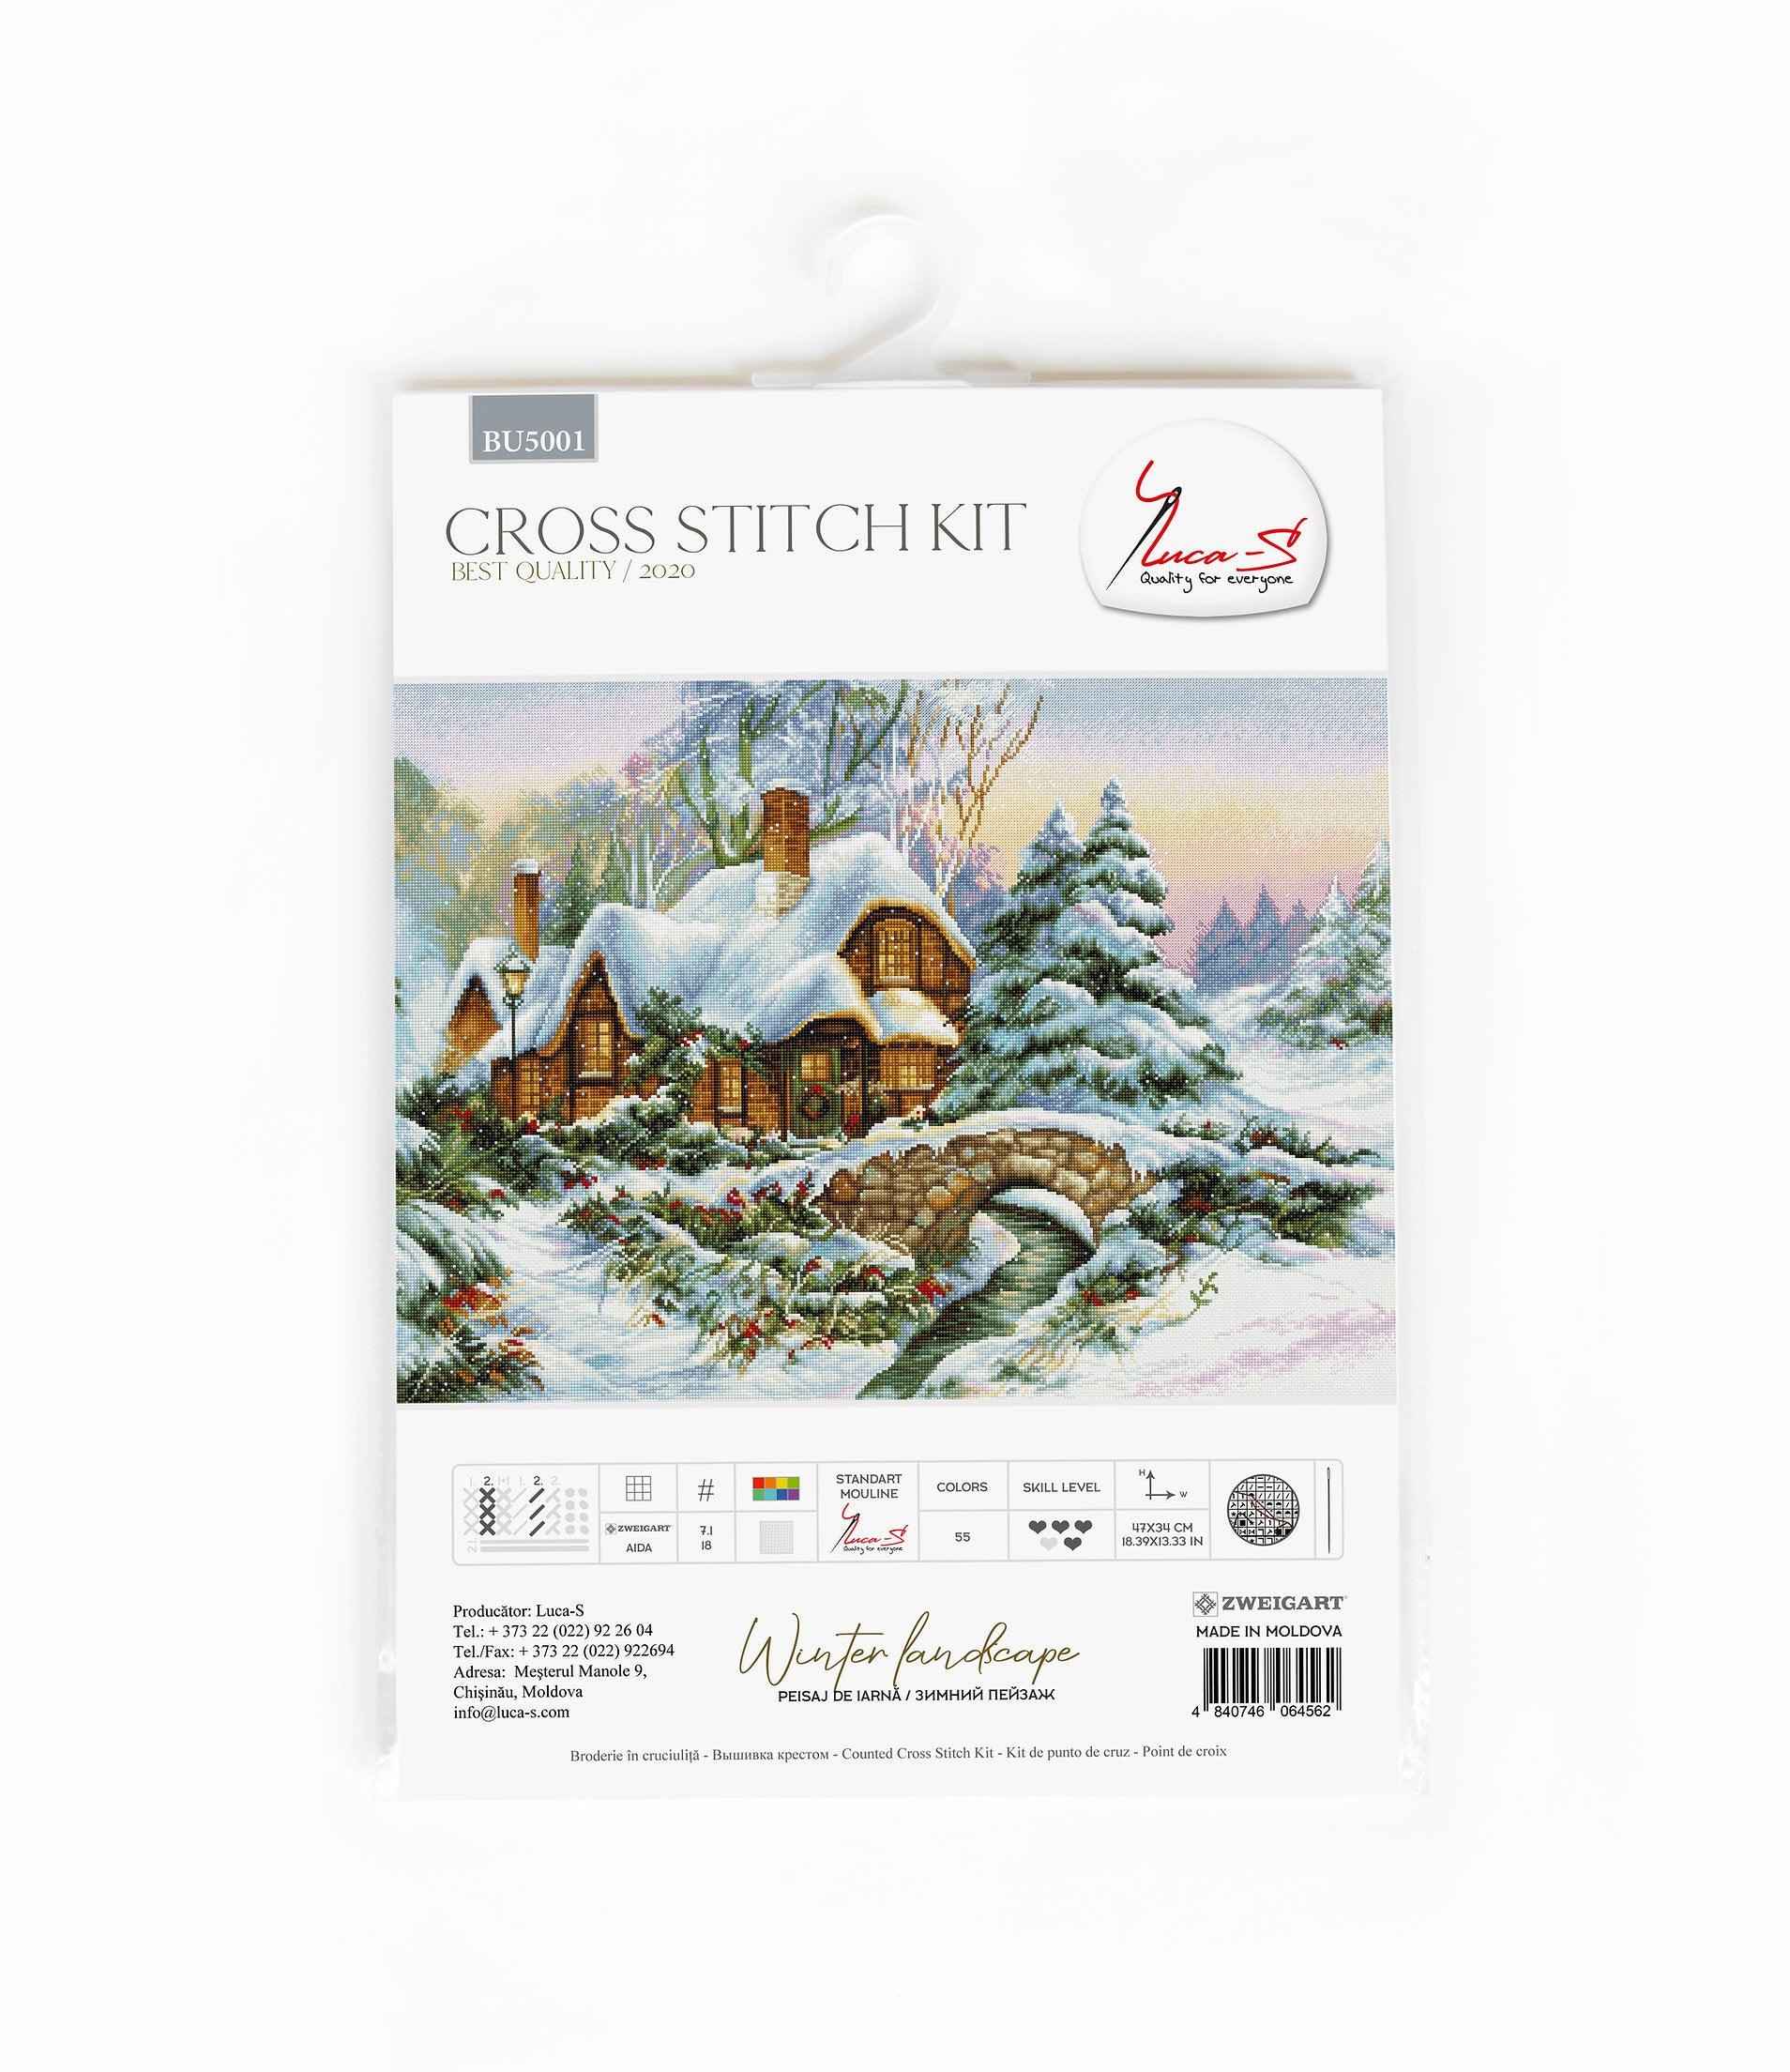 Cross Stitch Kit Luca-S - Winter landscape BU5001 - Luca-S Cross Stitch Kits